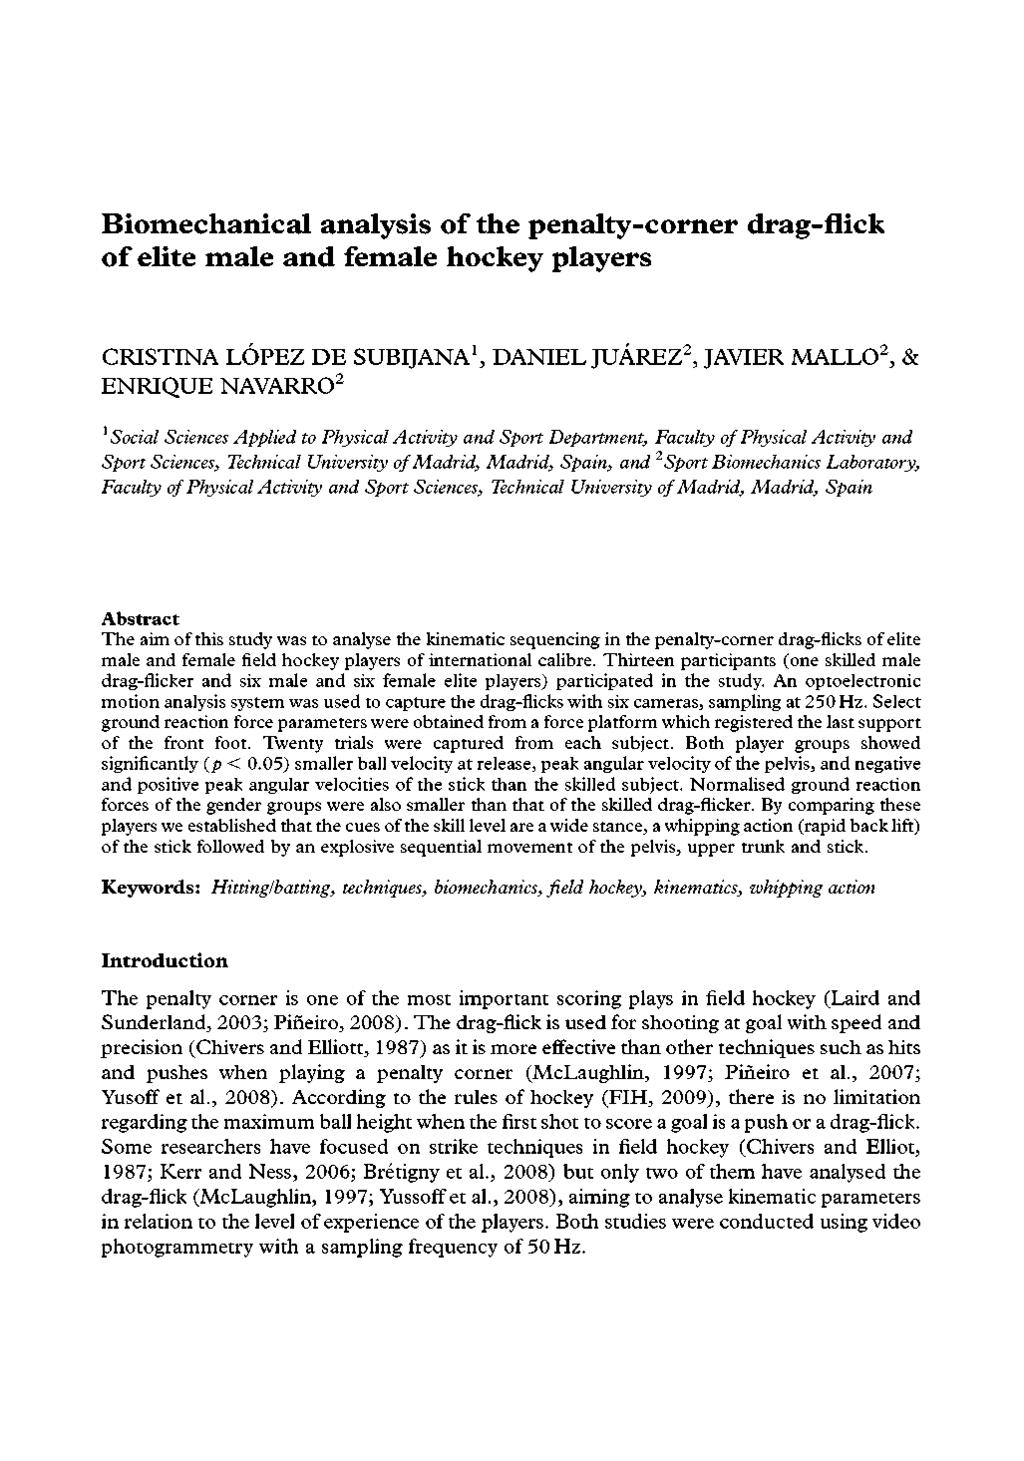 Biomechanical analysis of the penalty-corner drag-flick of elite male and female hockey players CRISTINA LÓPEZ DE SUBIJANA 1, DANIEL JUÁREZ 2, JAVIER MALLO 2, & ENRIQUE NAVARRO 2 1 Social Sciences